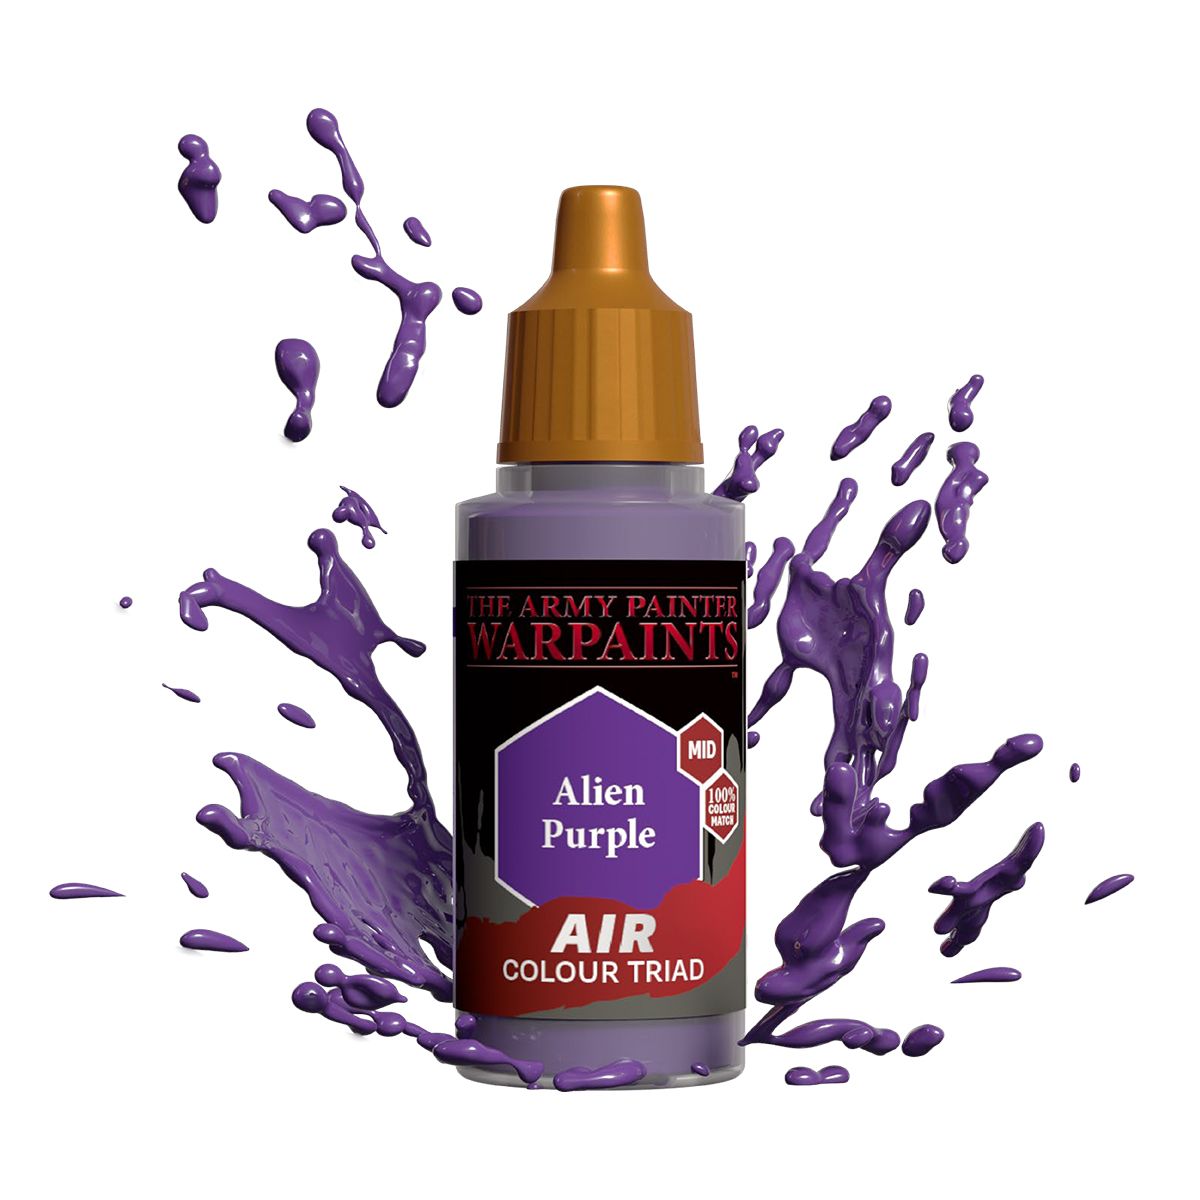 Army Painter Warpaints Air: Alien Purple 18ml